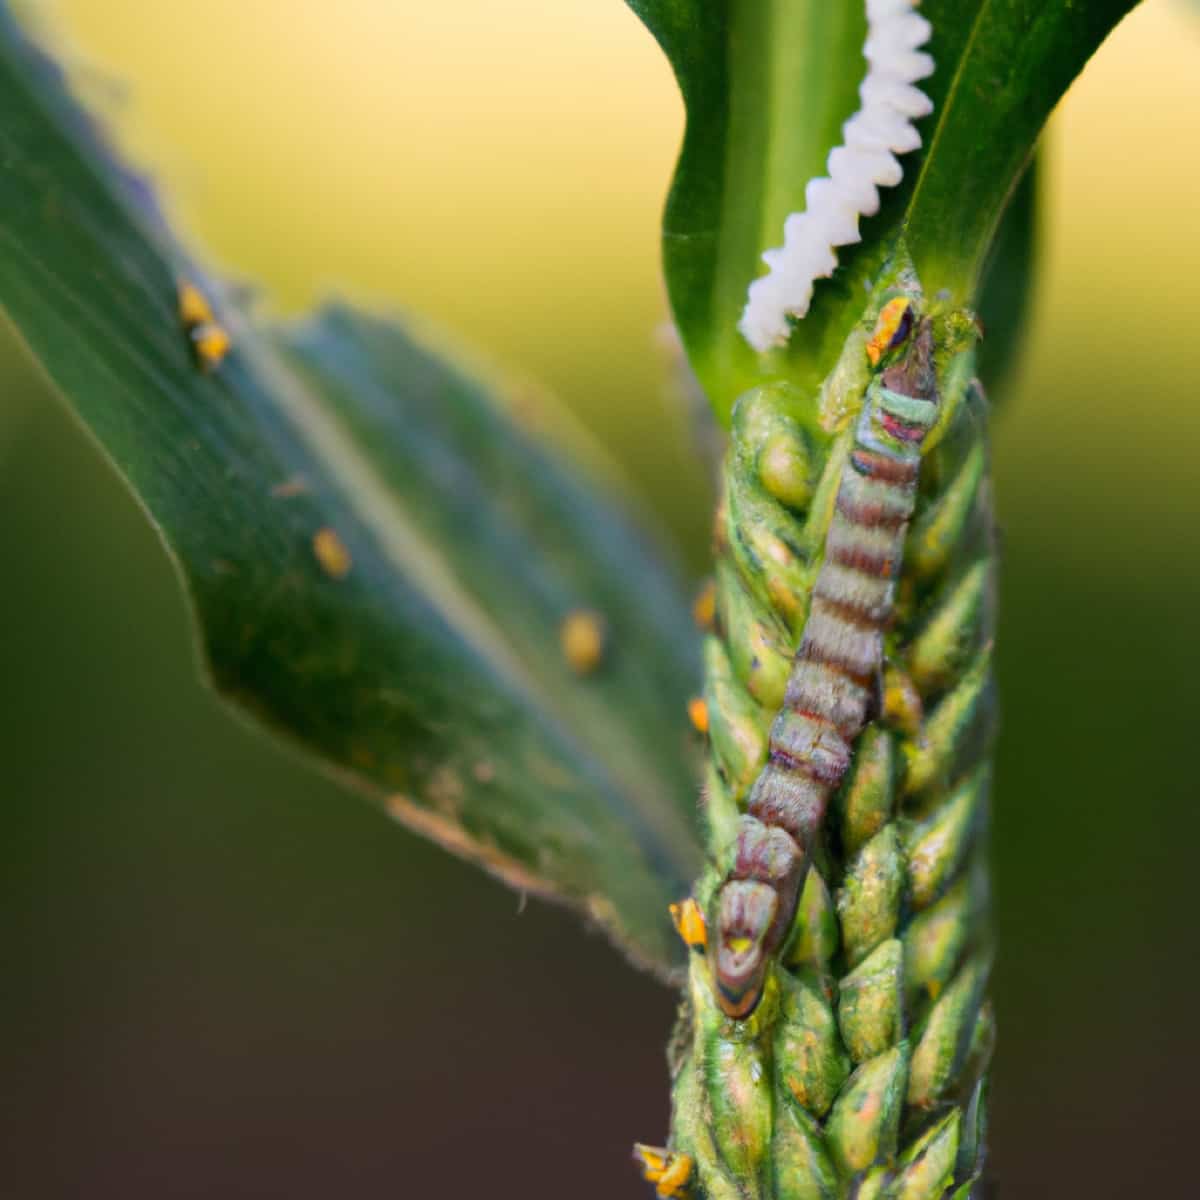 Ear Head Caterpillar Management in Sorghum